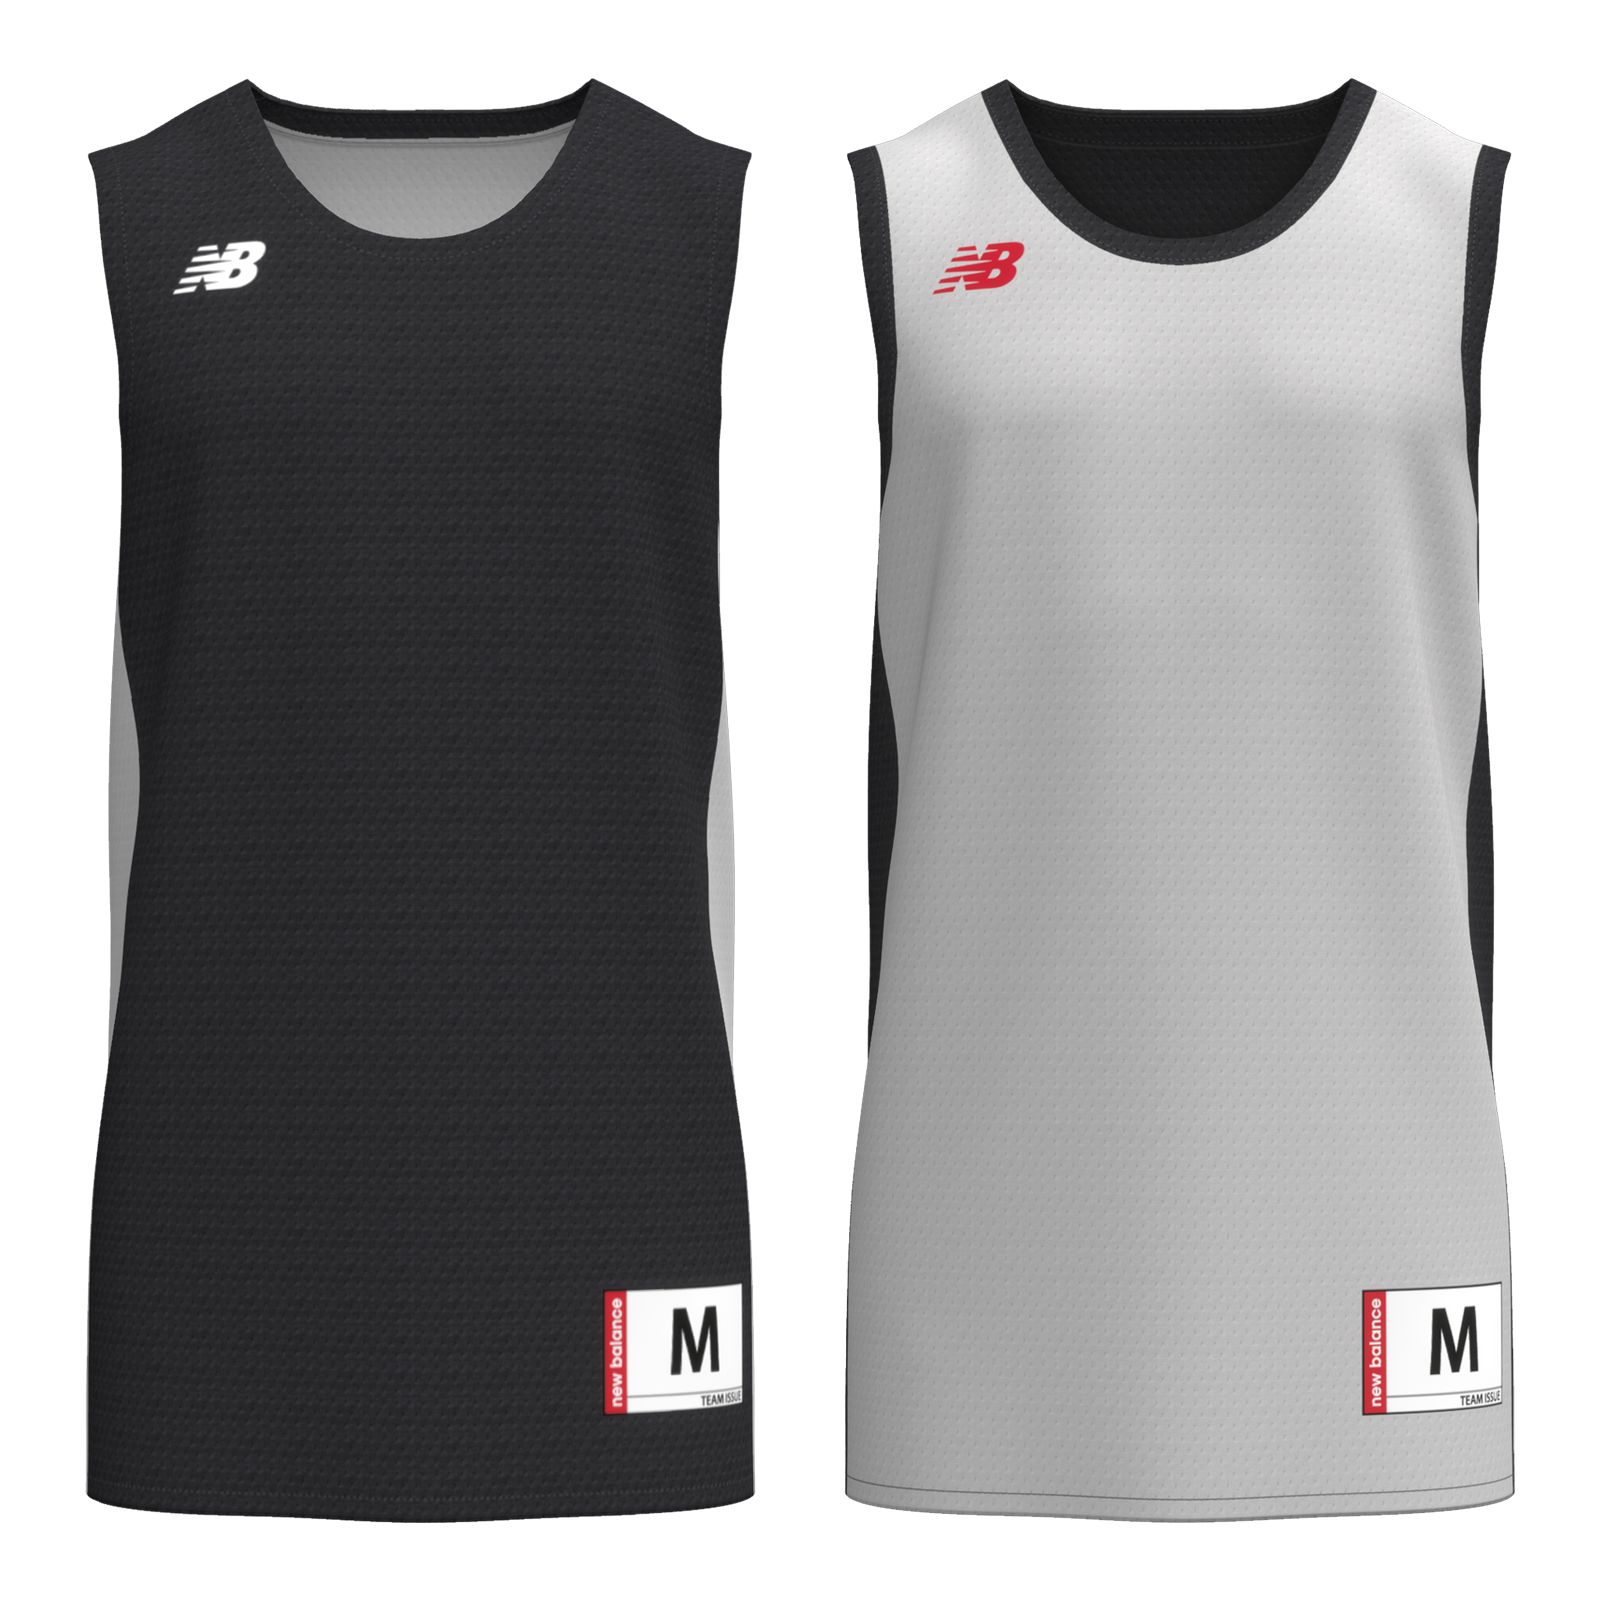 Custom Reversible Basketball Jersey Set Black and White - Jersey One